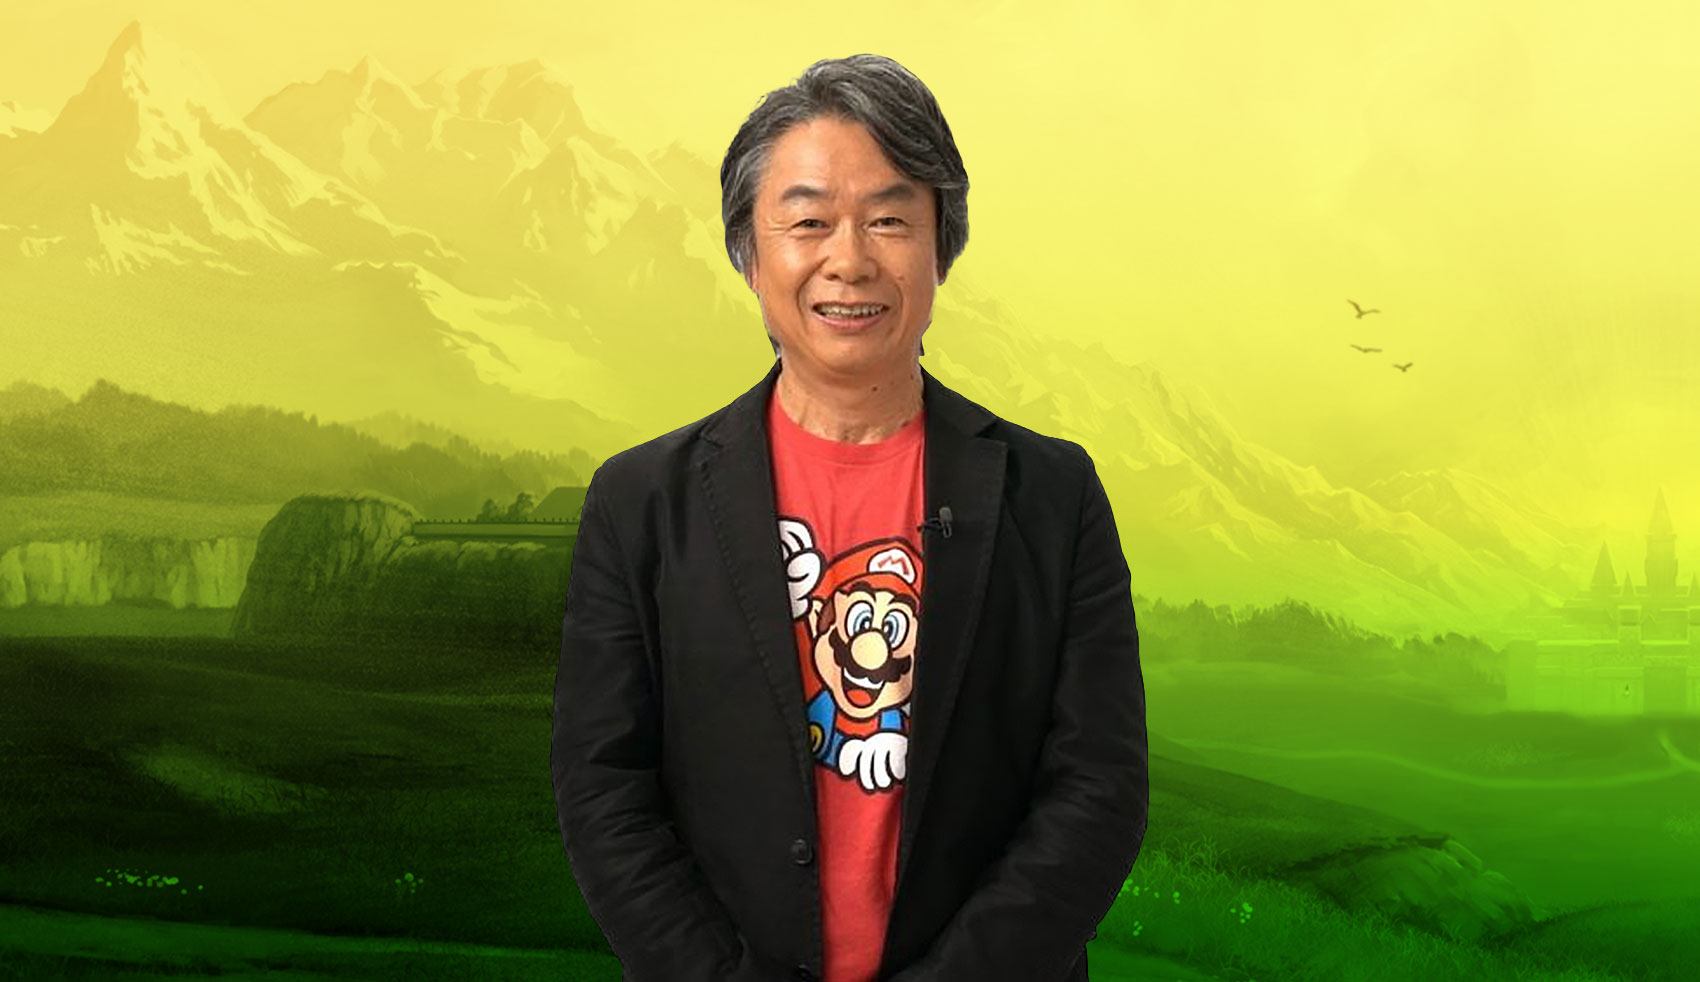 I was looking up Shigeru miyamoto's age